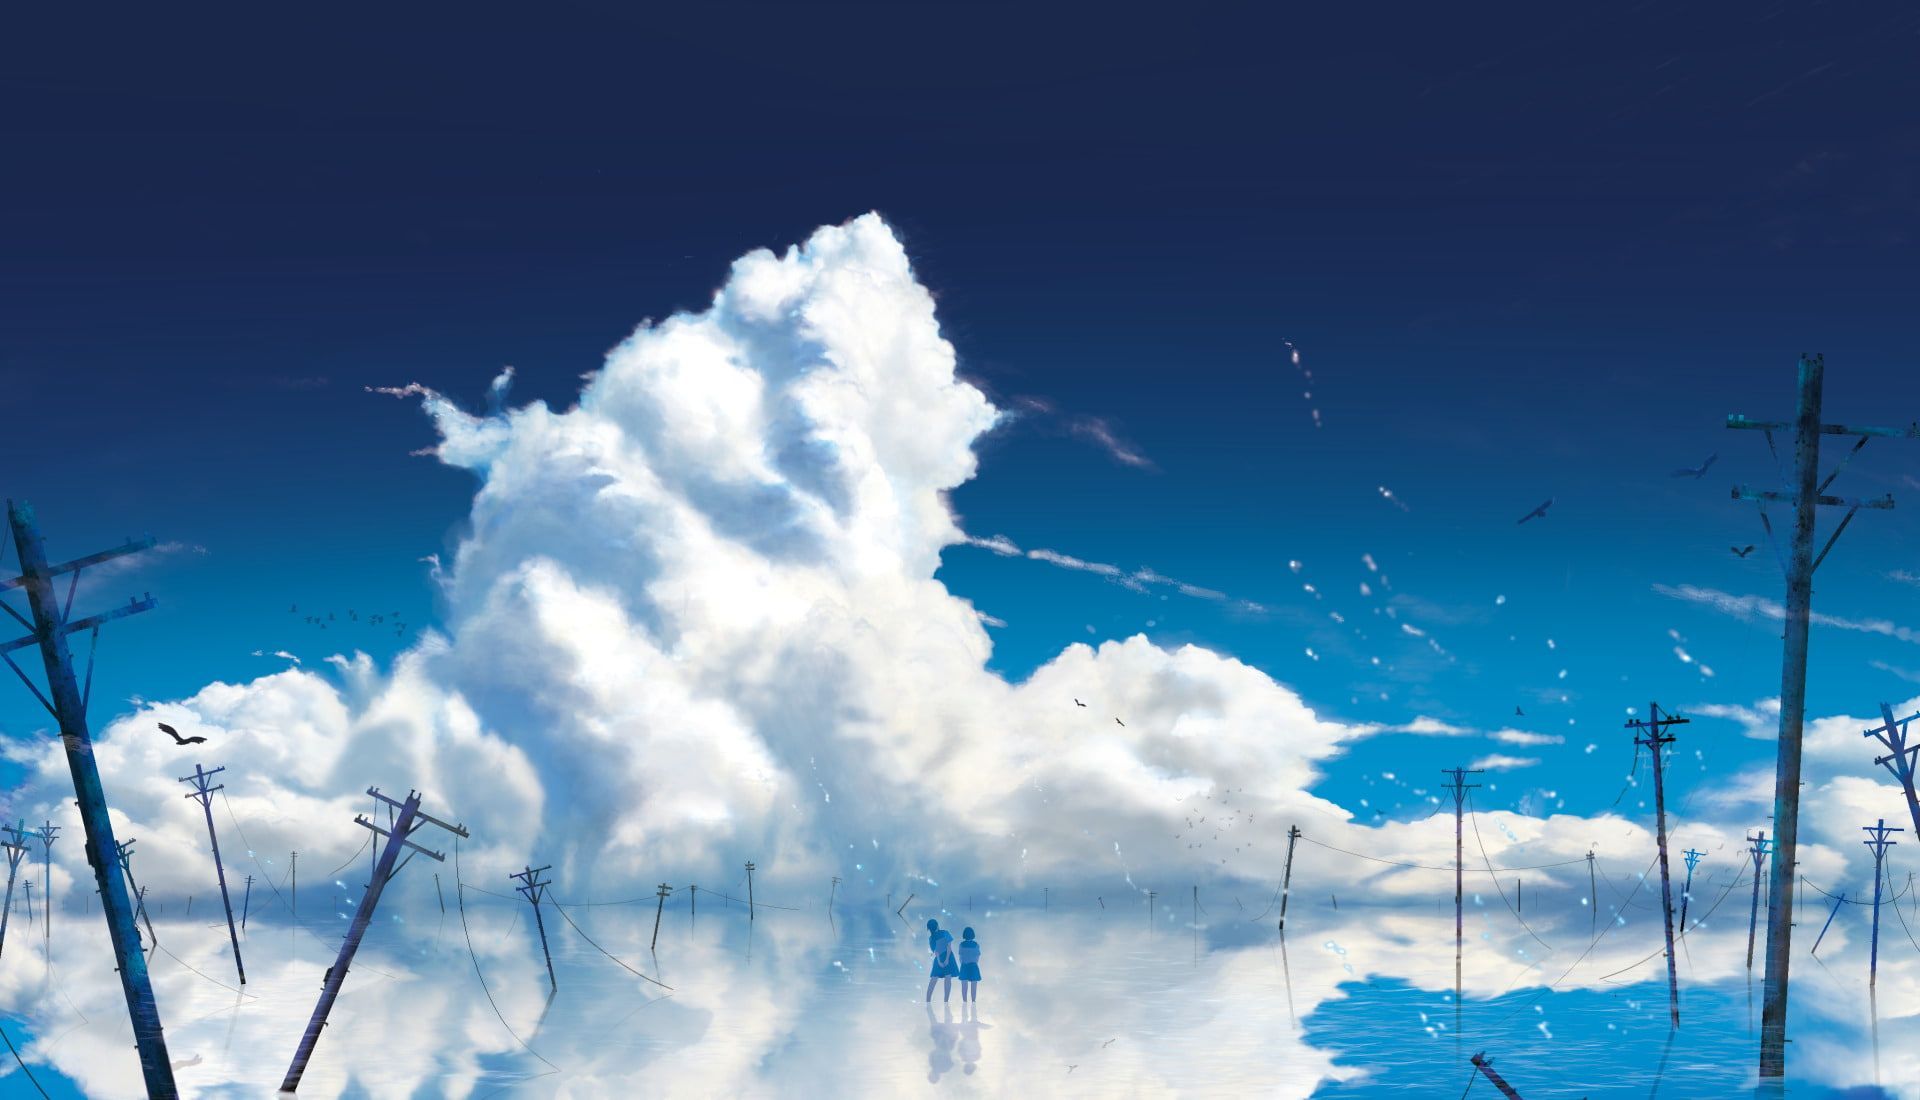 Anime #Original #Cloud #Girl #Reflection #Skirt #Sky Telephone Pole #Water P #wallpaper #hdwallpape in 2021x1152 wallpaper, Scenery background, Anime scenery